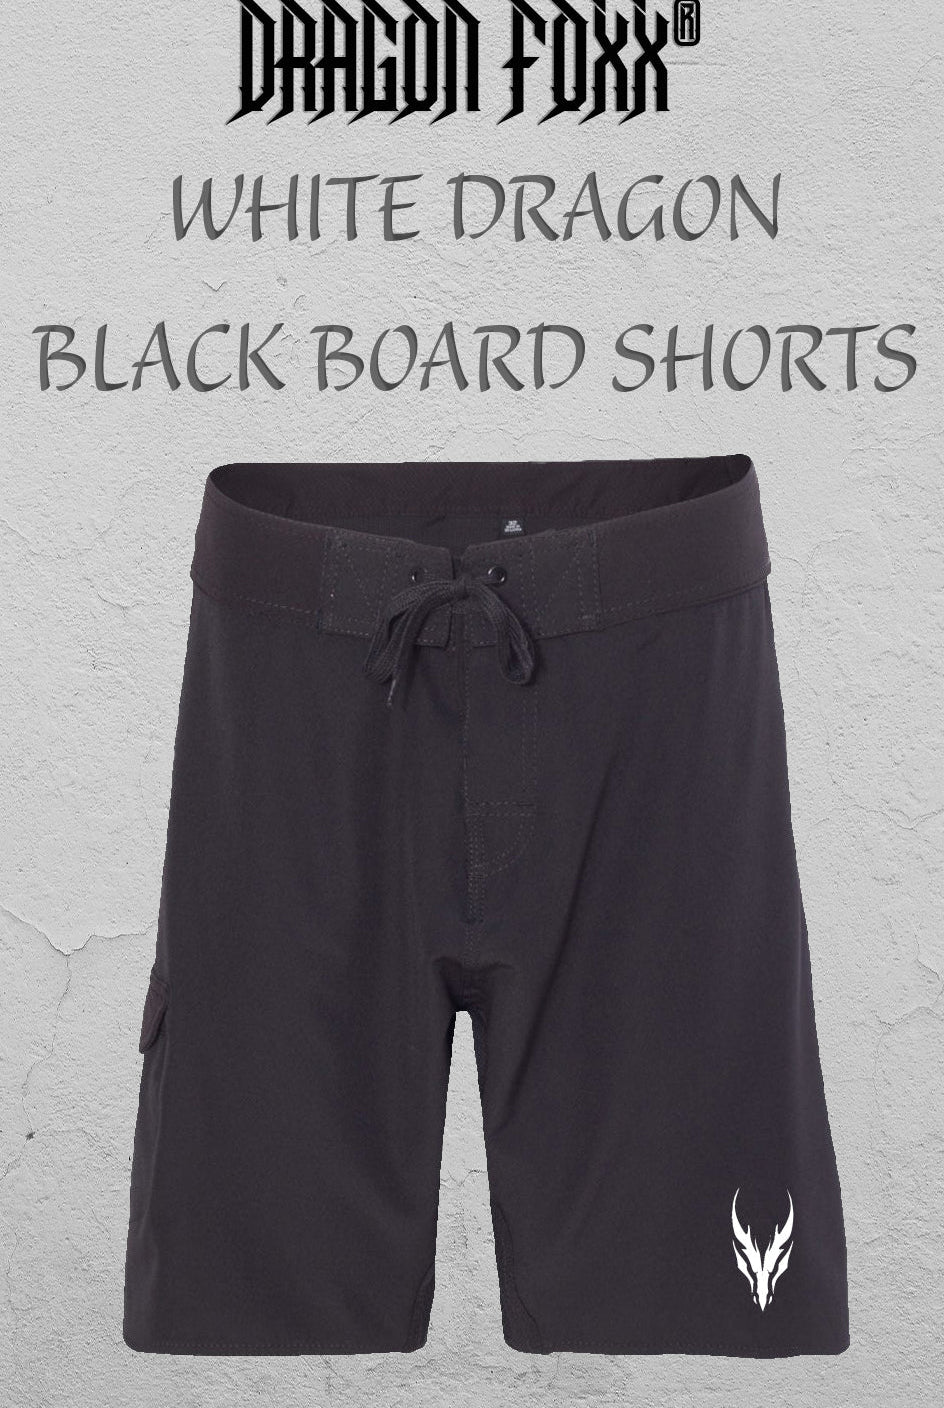 White Dragon Black Board Shorts - Men's Shorts - Apliiq - White Dragon Black Board Shorts - APQ - 4761399S71A1 - 30 - Solid Black - Black - Black Board Shorts - Black Shorts